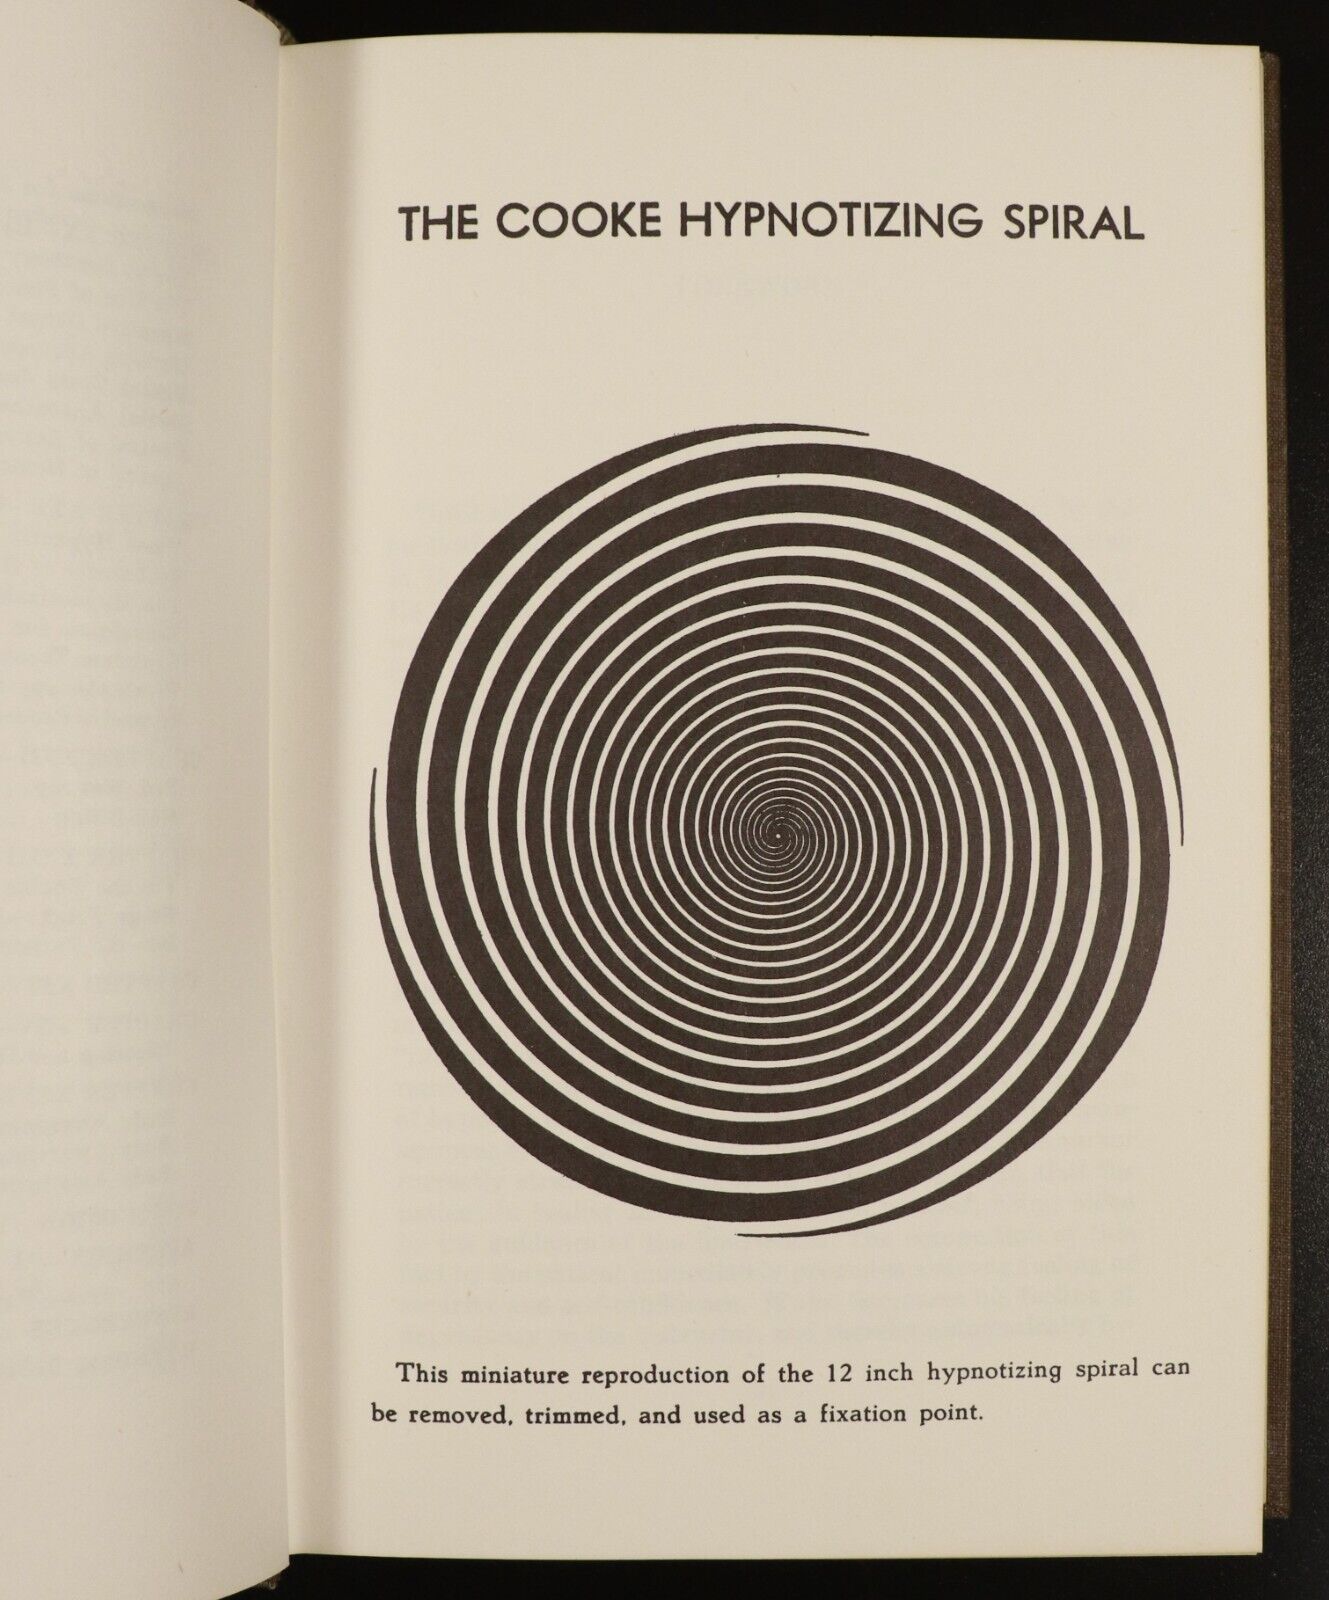 1965 The Hypnotism Handbook By Charles Edward Cooke - Vintage Hypnosis Book